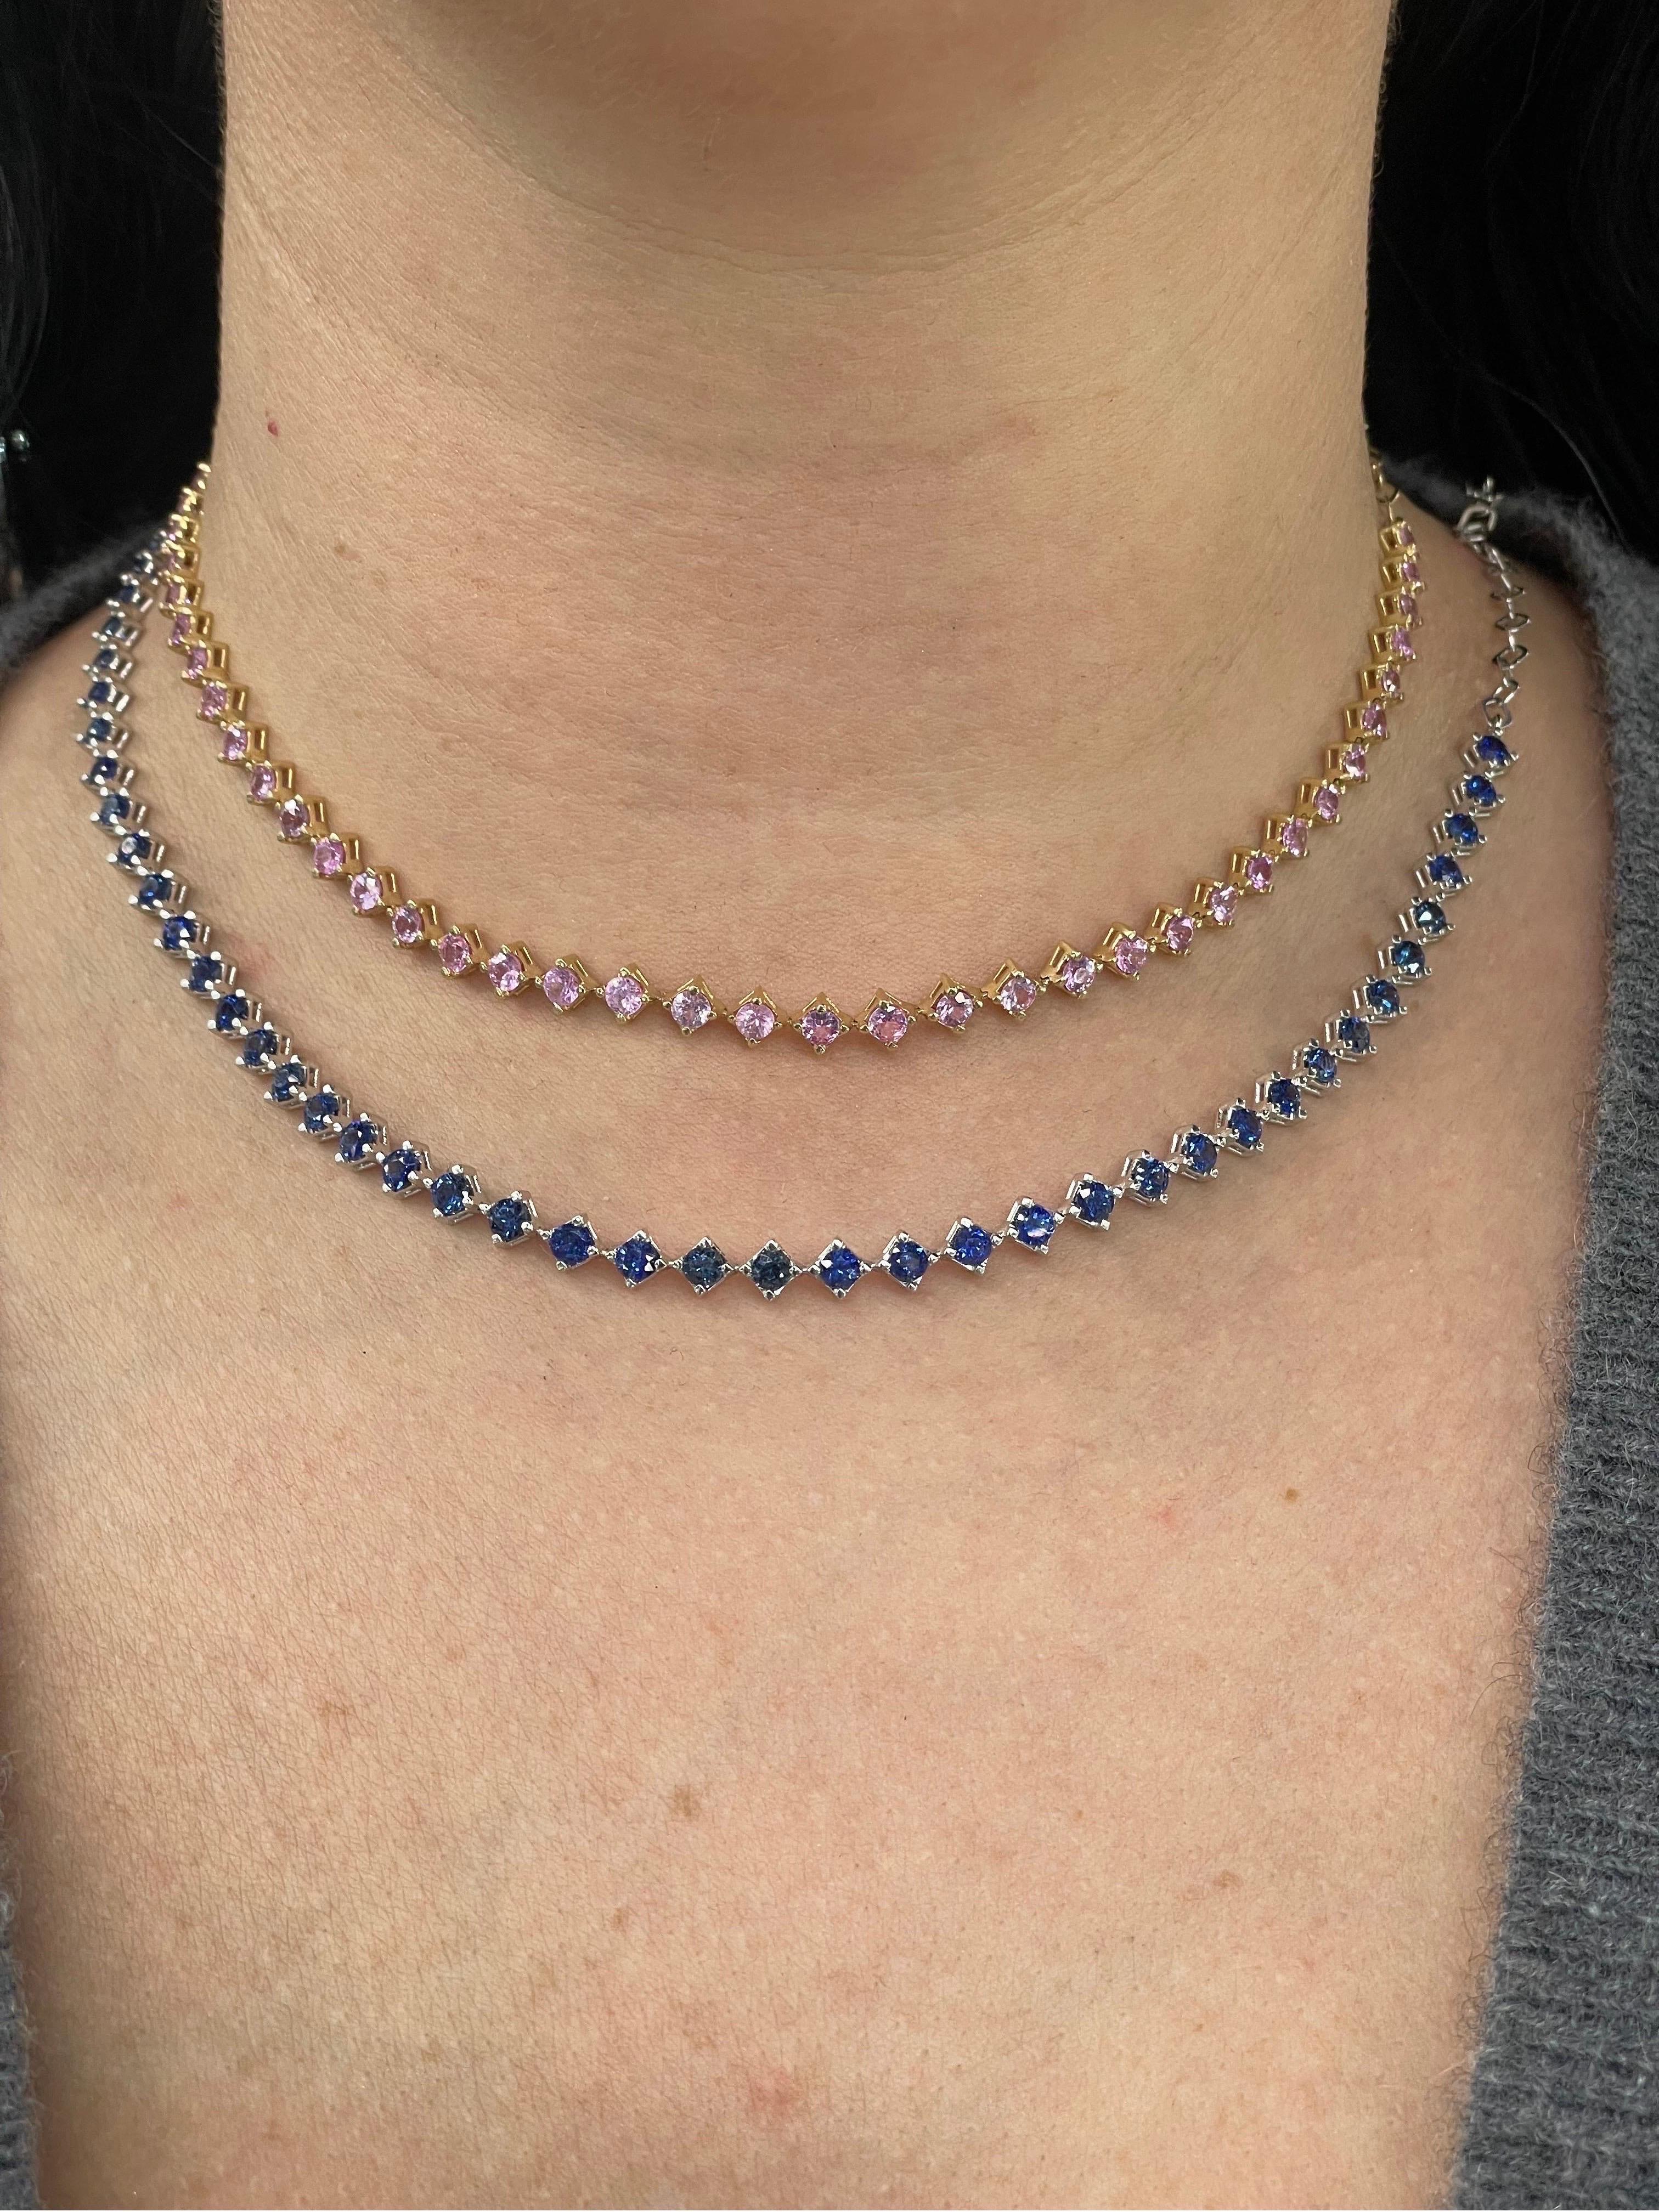 Pink Sapphire Choker Necklace & Bracelet 5.61 Carats 14k Yellow Gold Adjustable 6